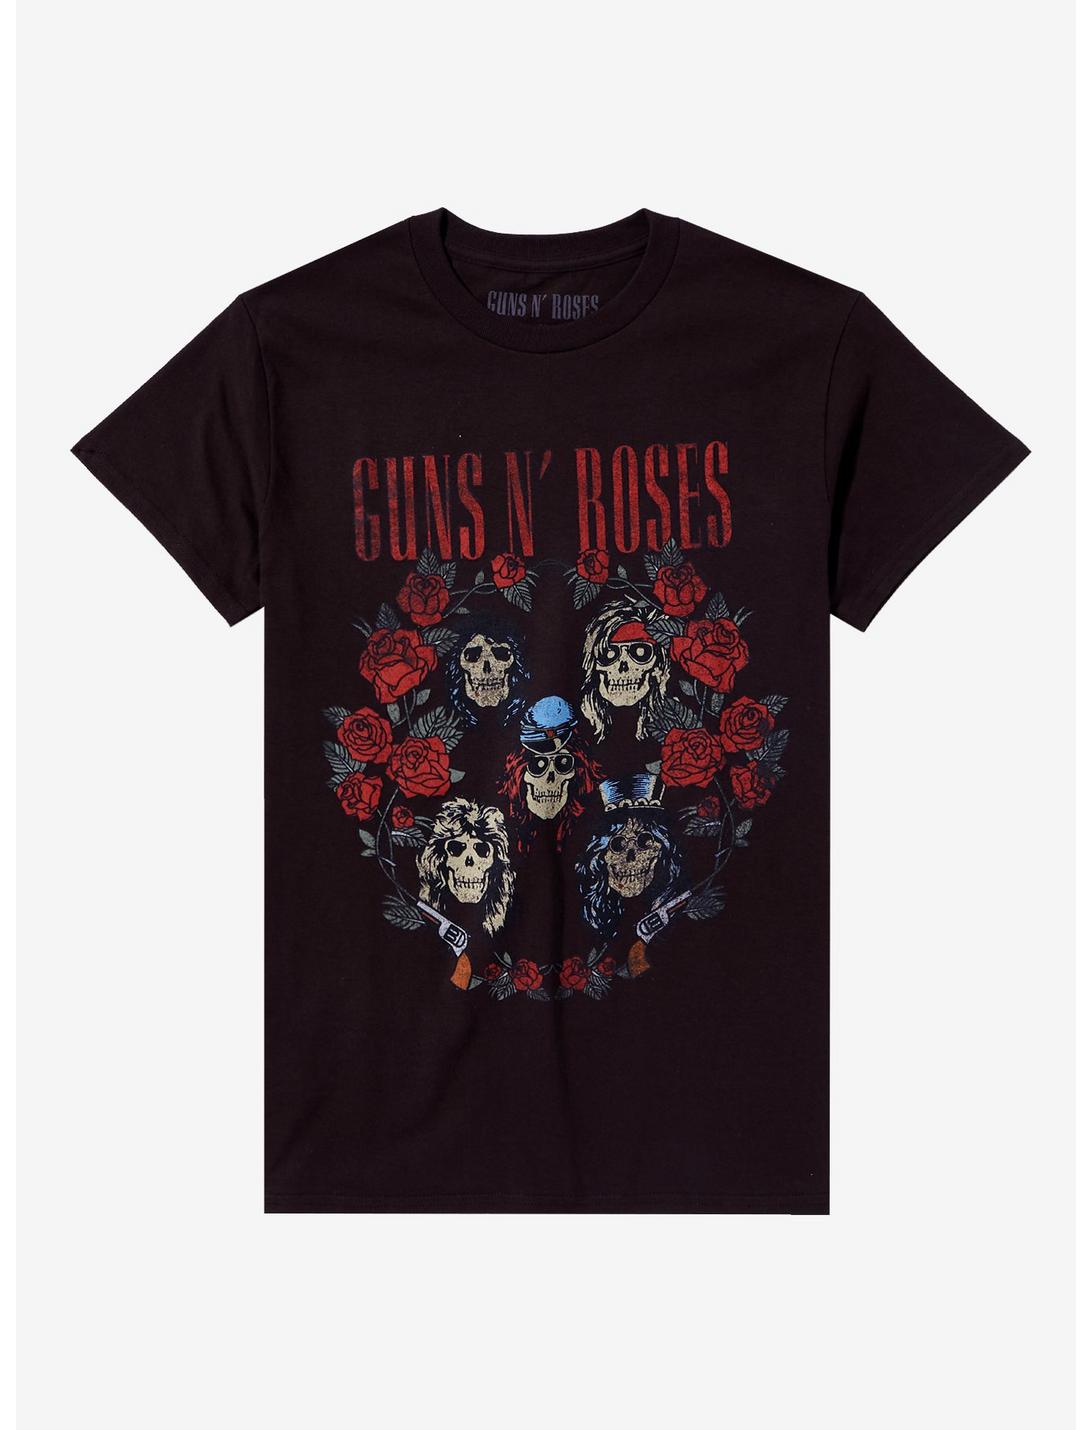 Guns N' Roses Appetite For Destruction Skulls Boyfriend Fit Girls T-Shirt, BROWN, hi-res